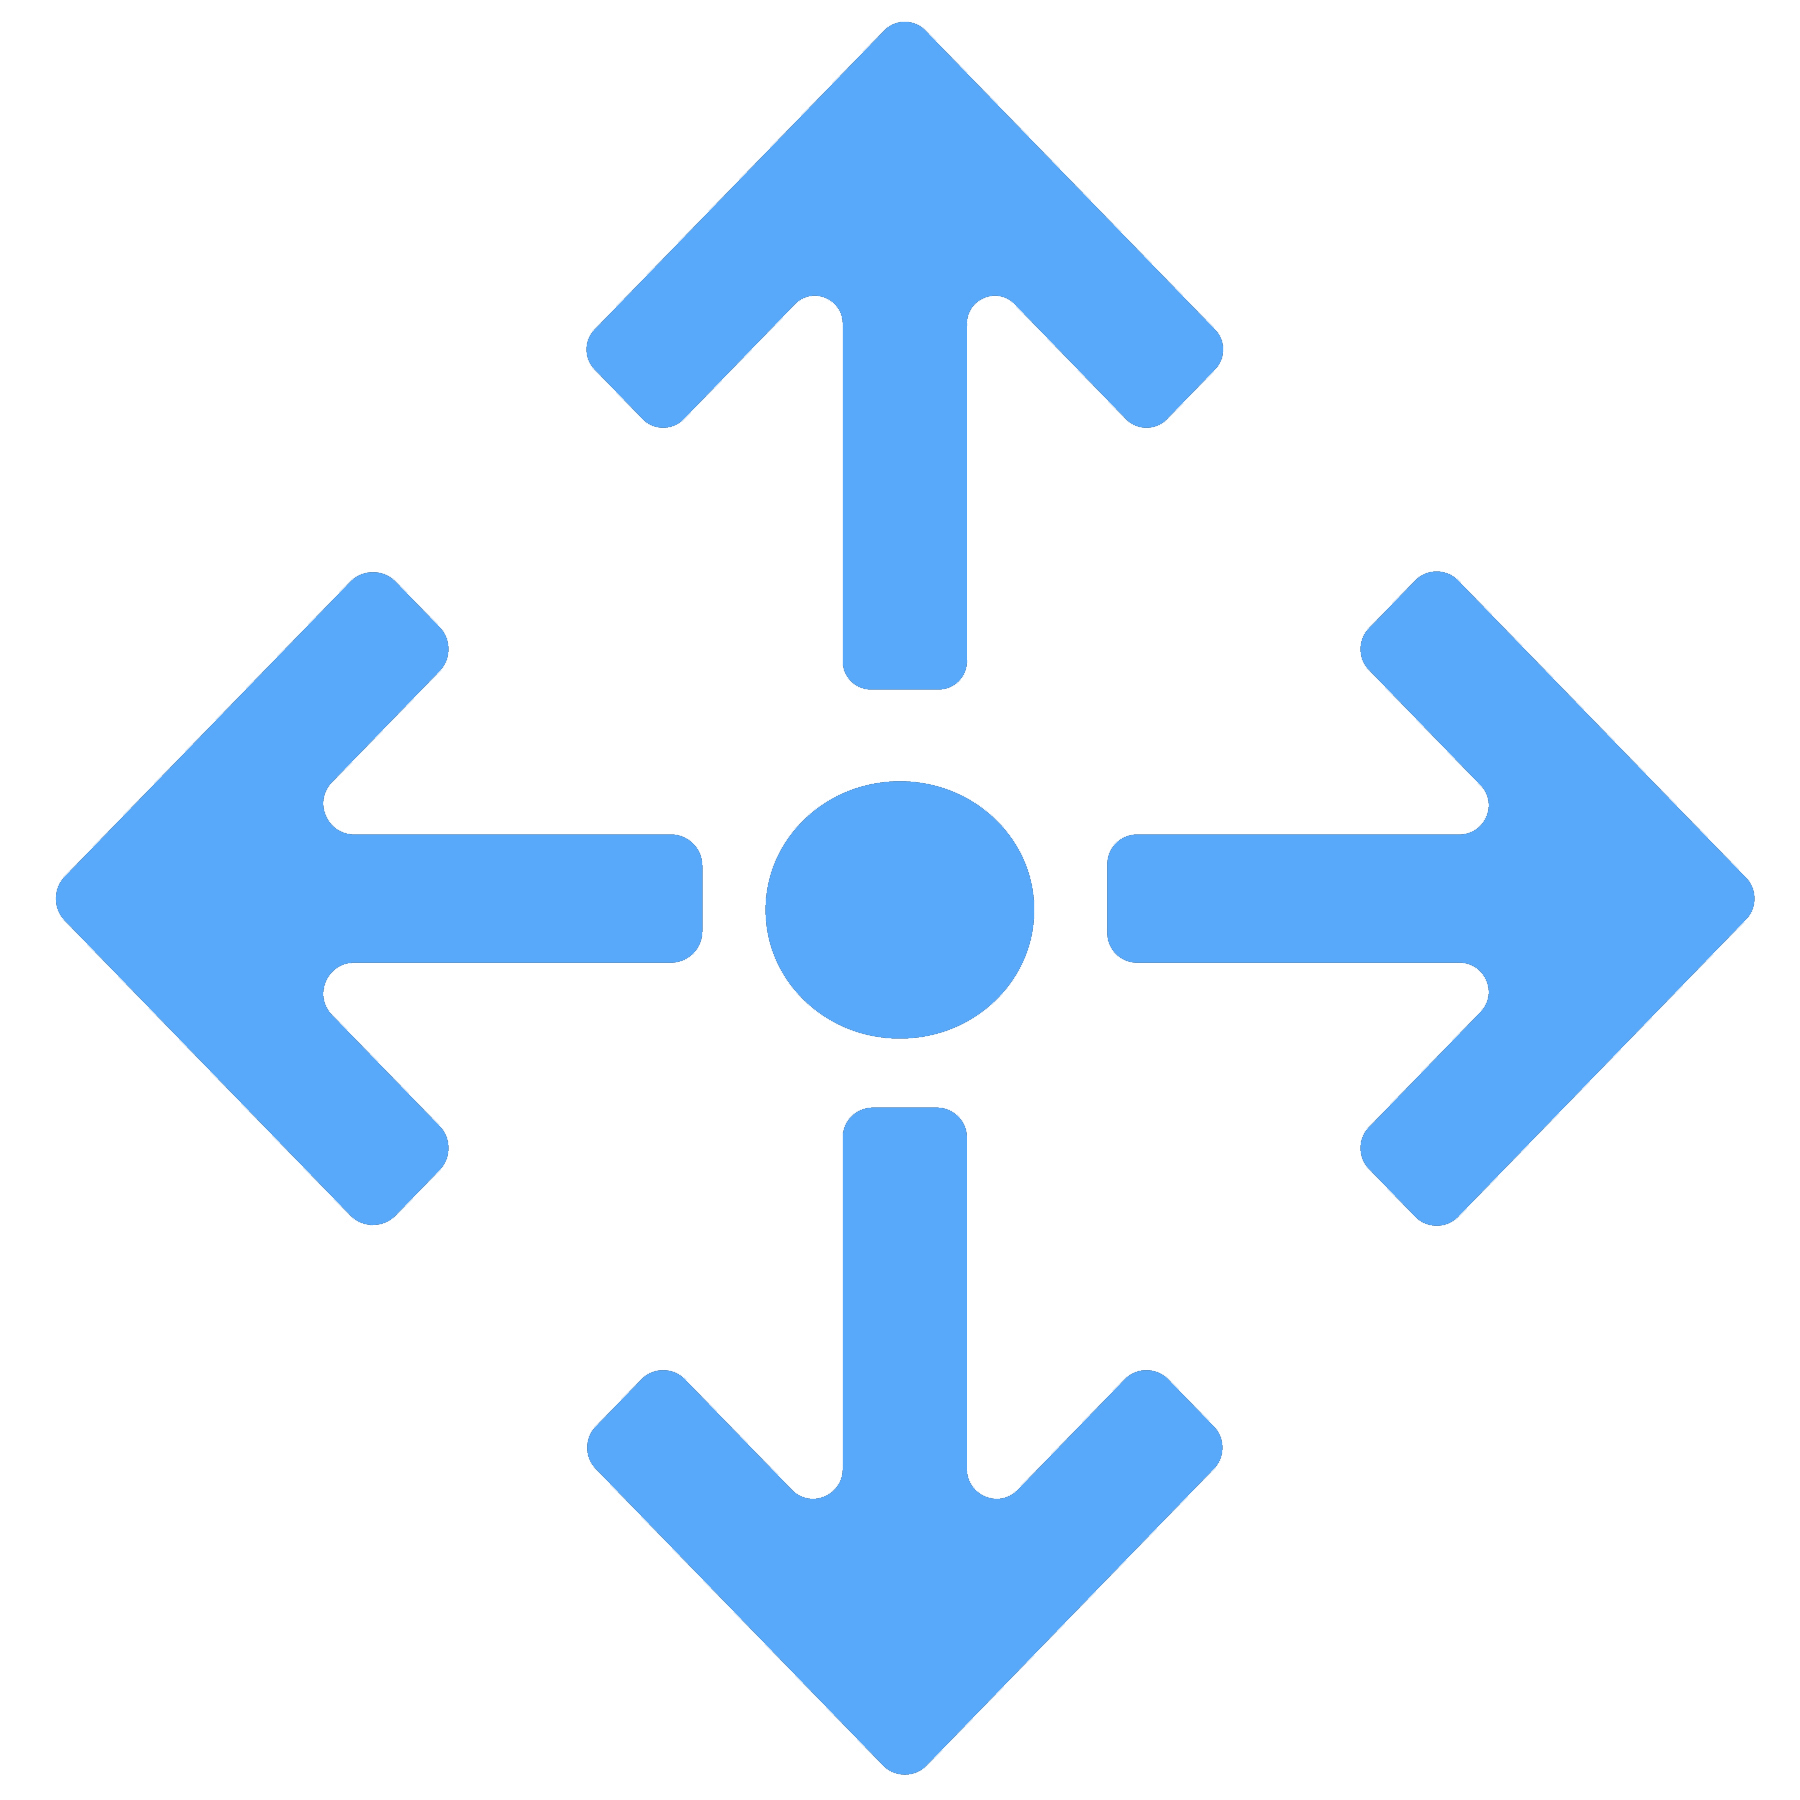 expansion. navigation icon